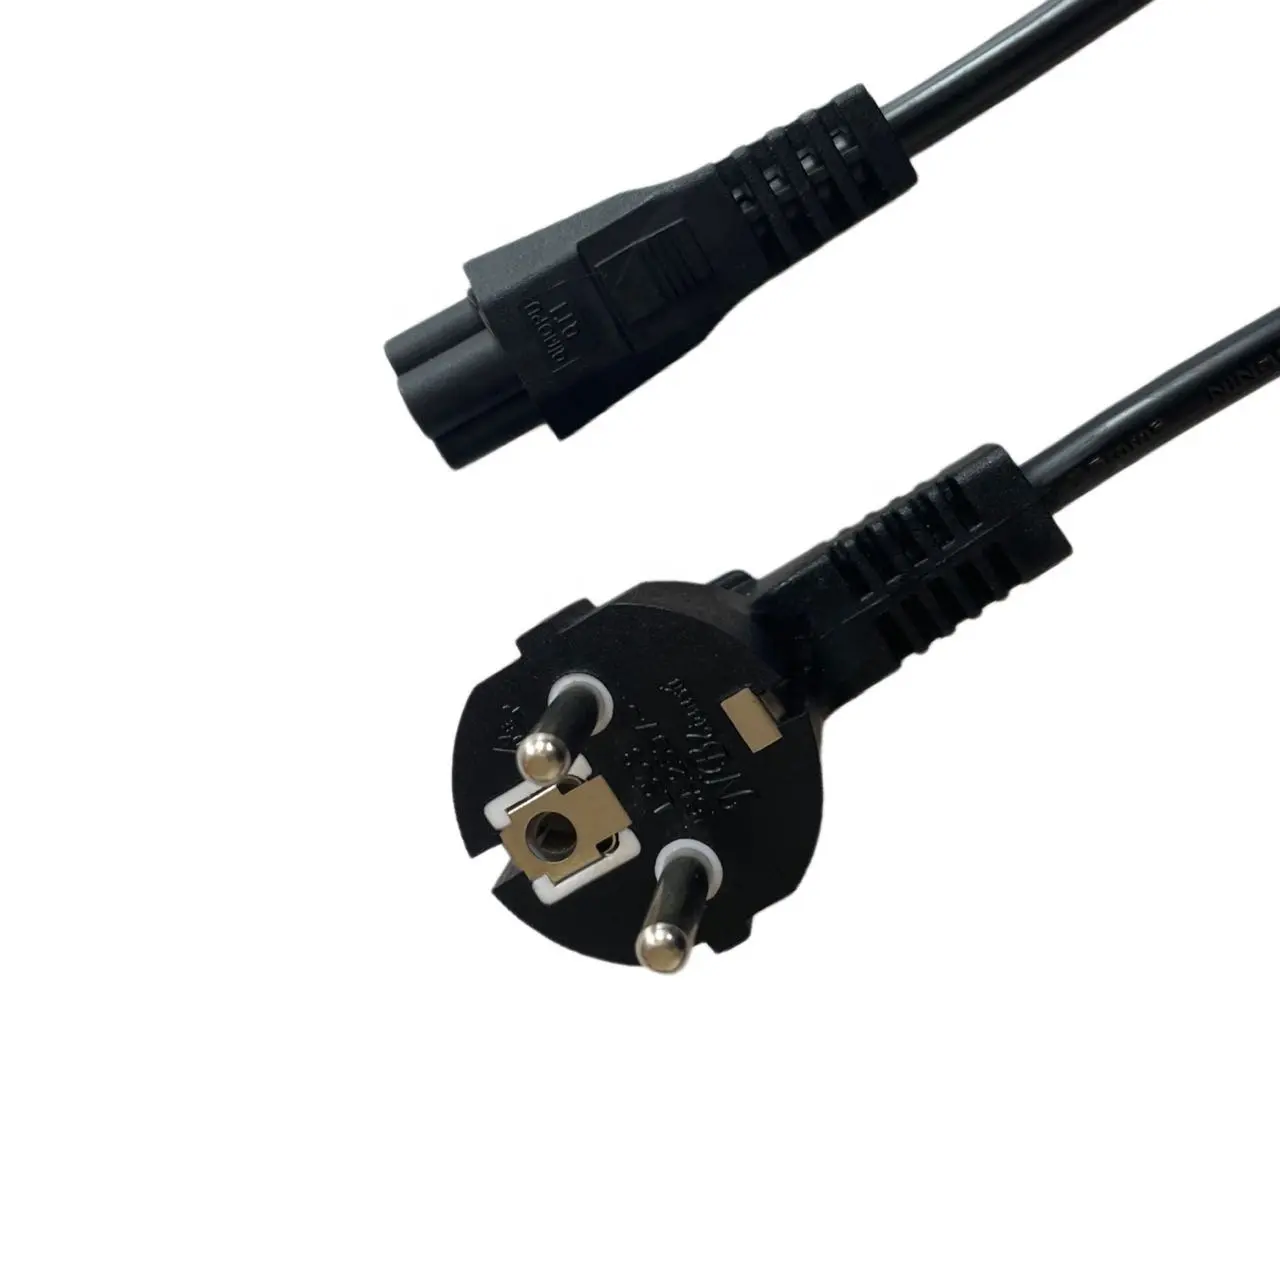 [Kostenlose Muster European VDE 2 Prong Round Pin 2.5A Wasserdichter Stecker Netz kabel & Verlängerung kabel Schwarzes Elektrokessel-Netz kabel